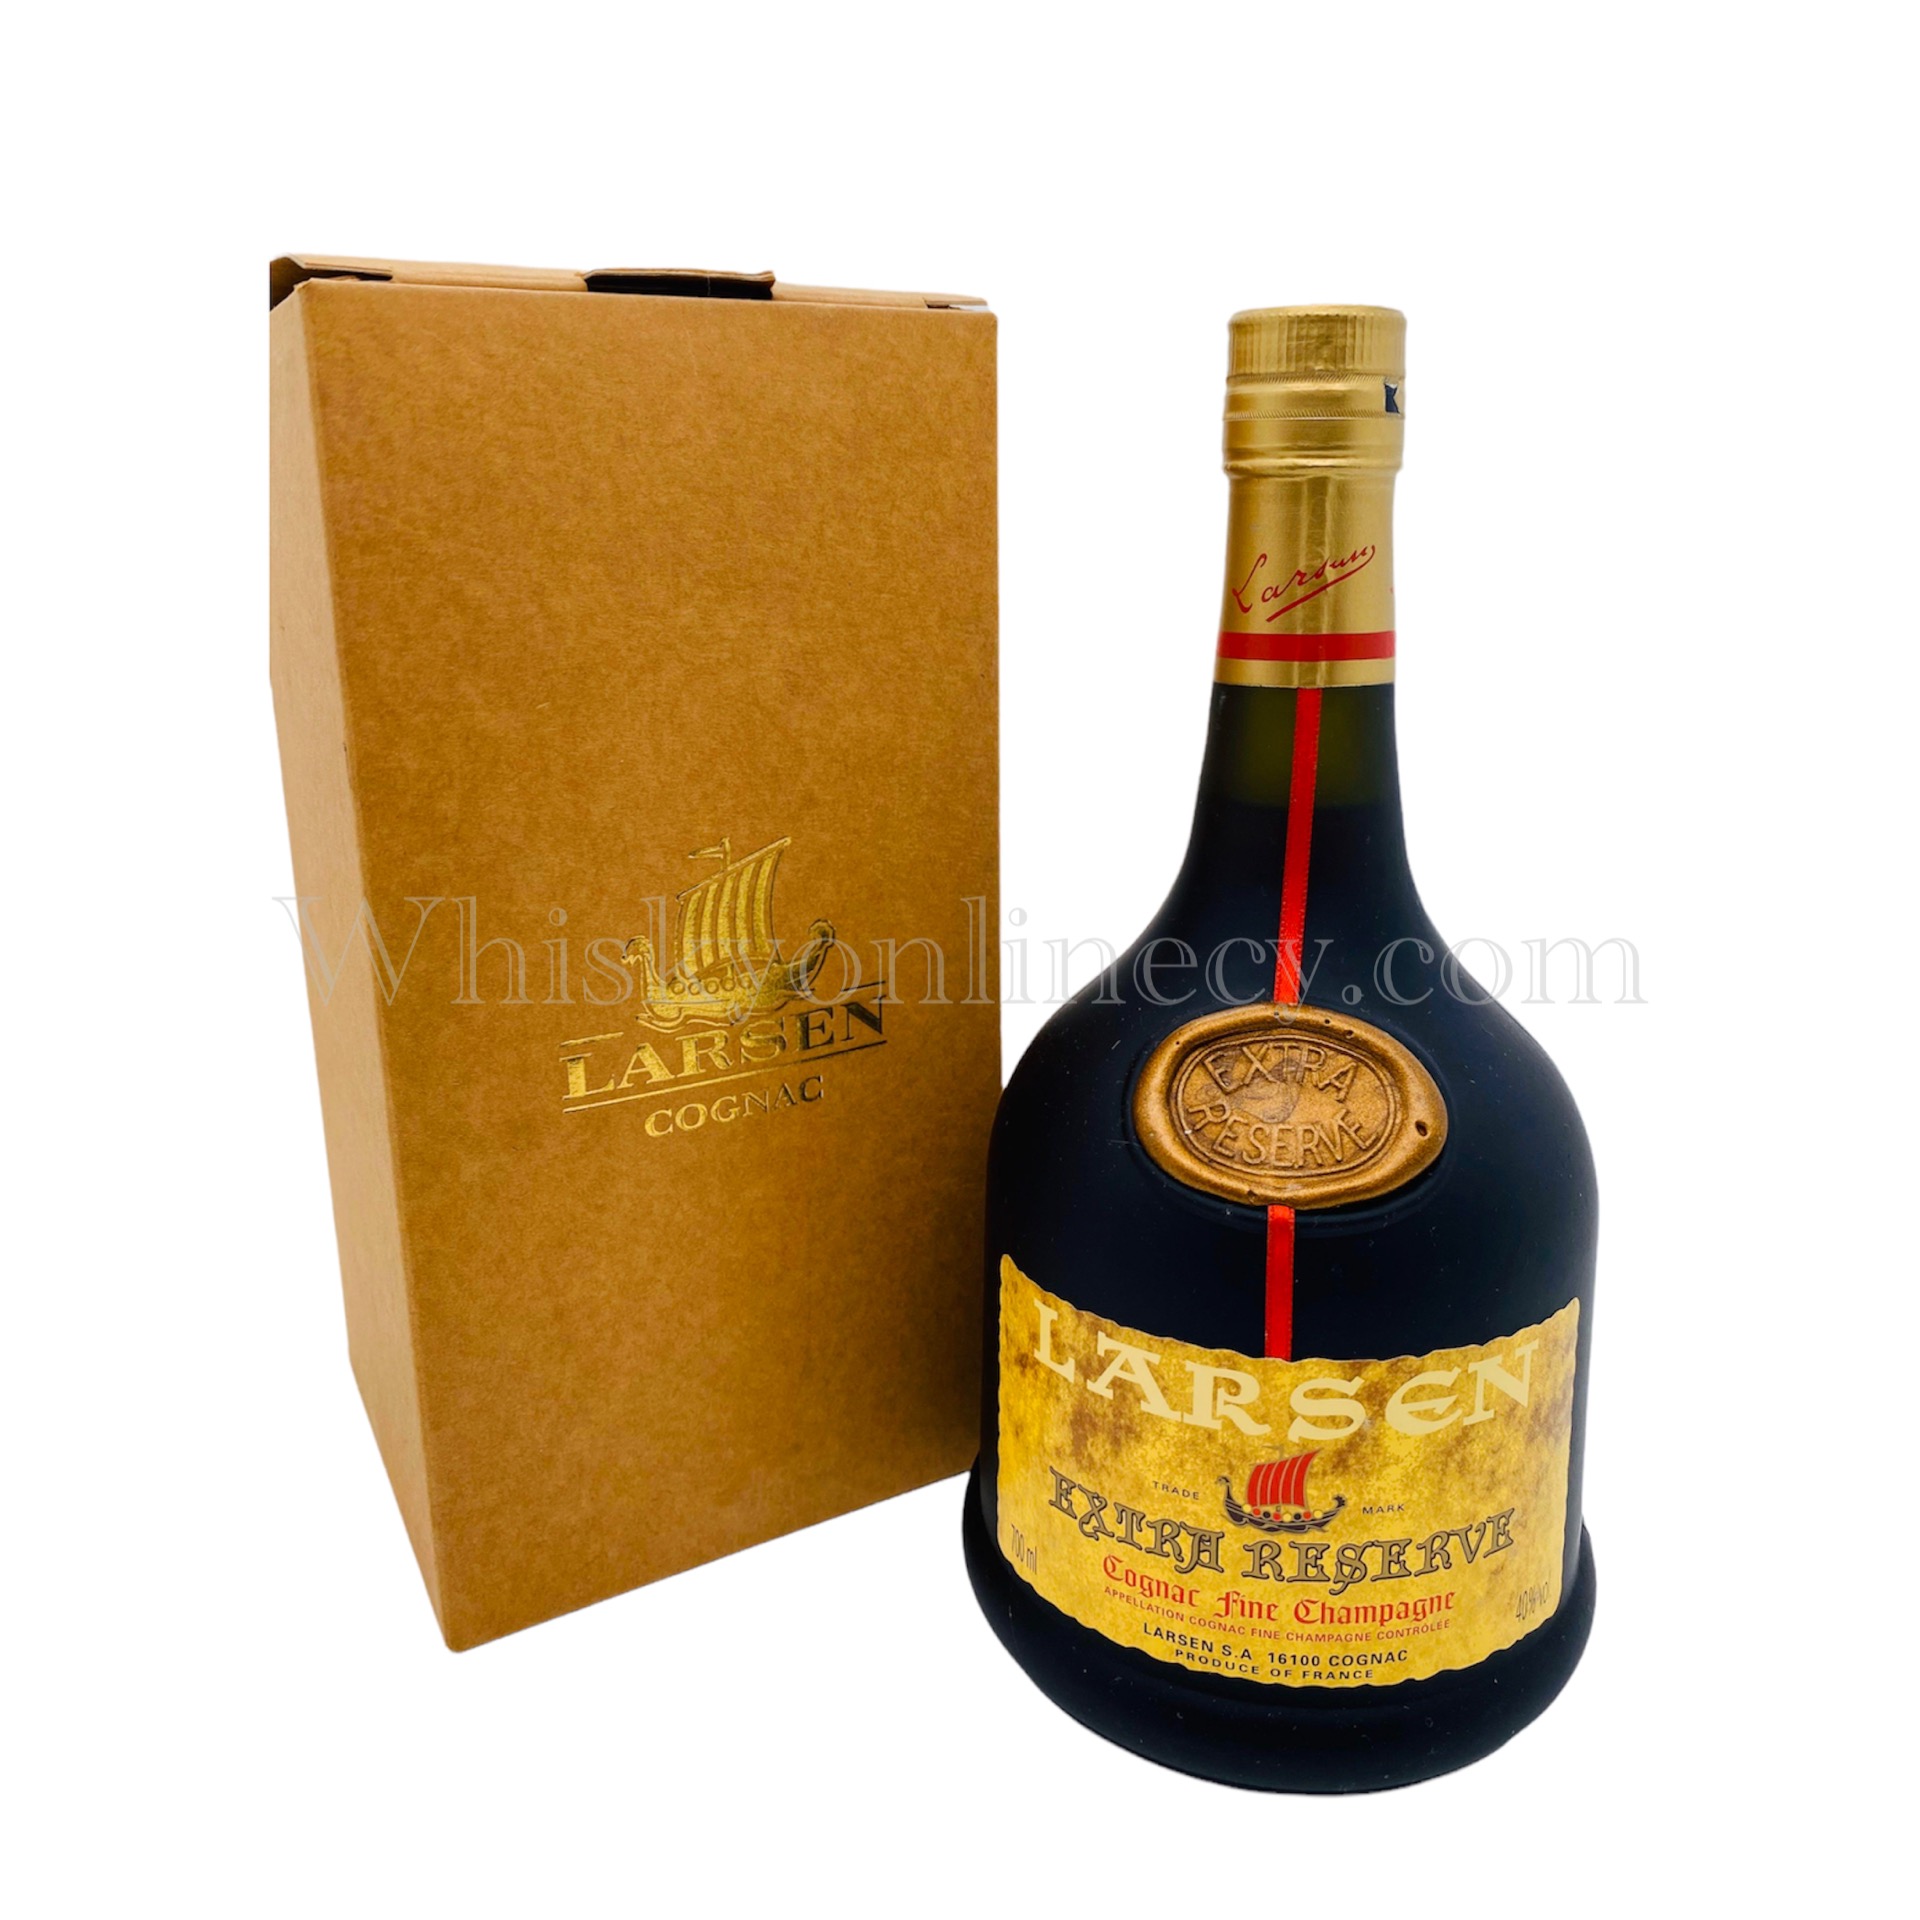 Larsen cognac Fine champange